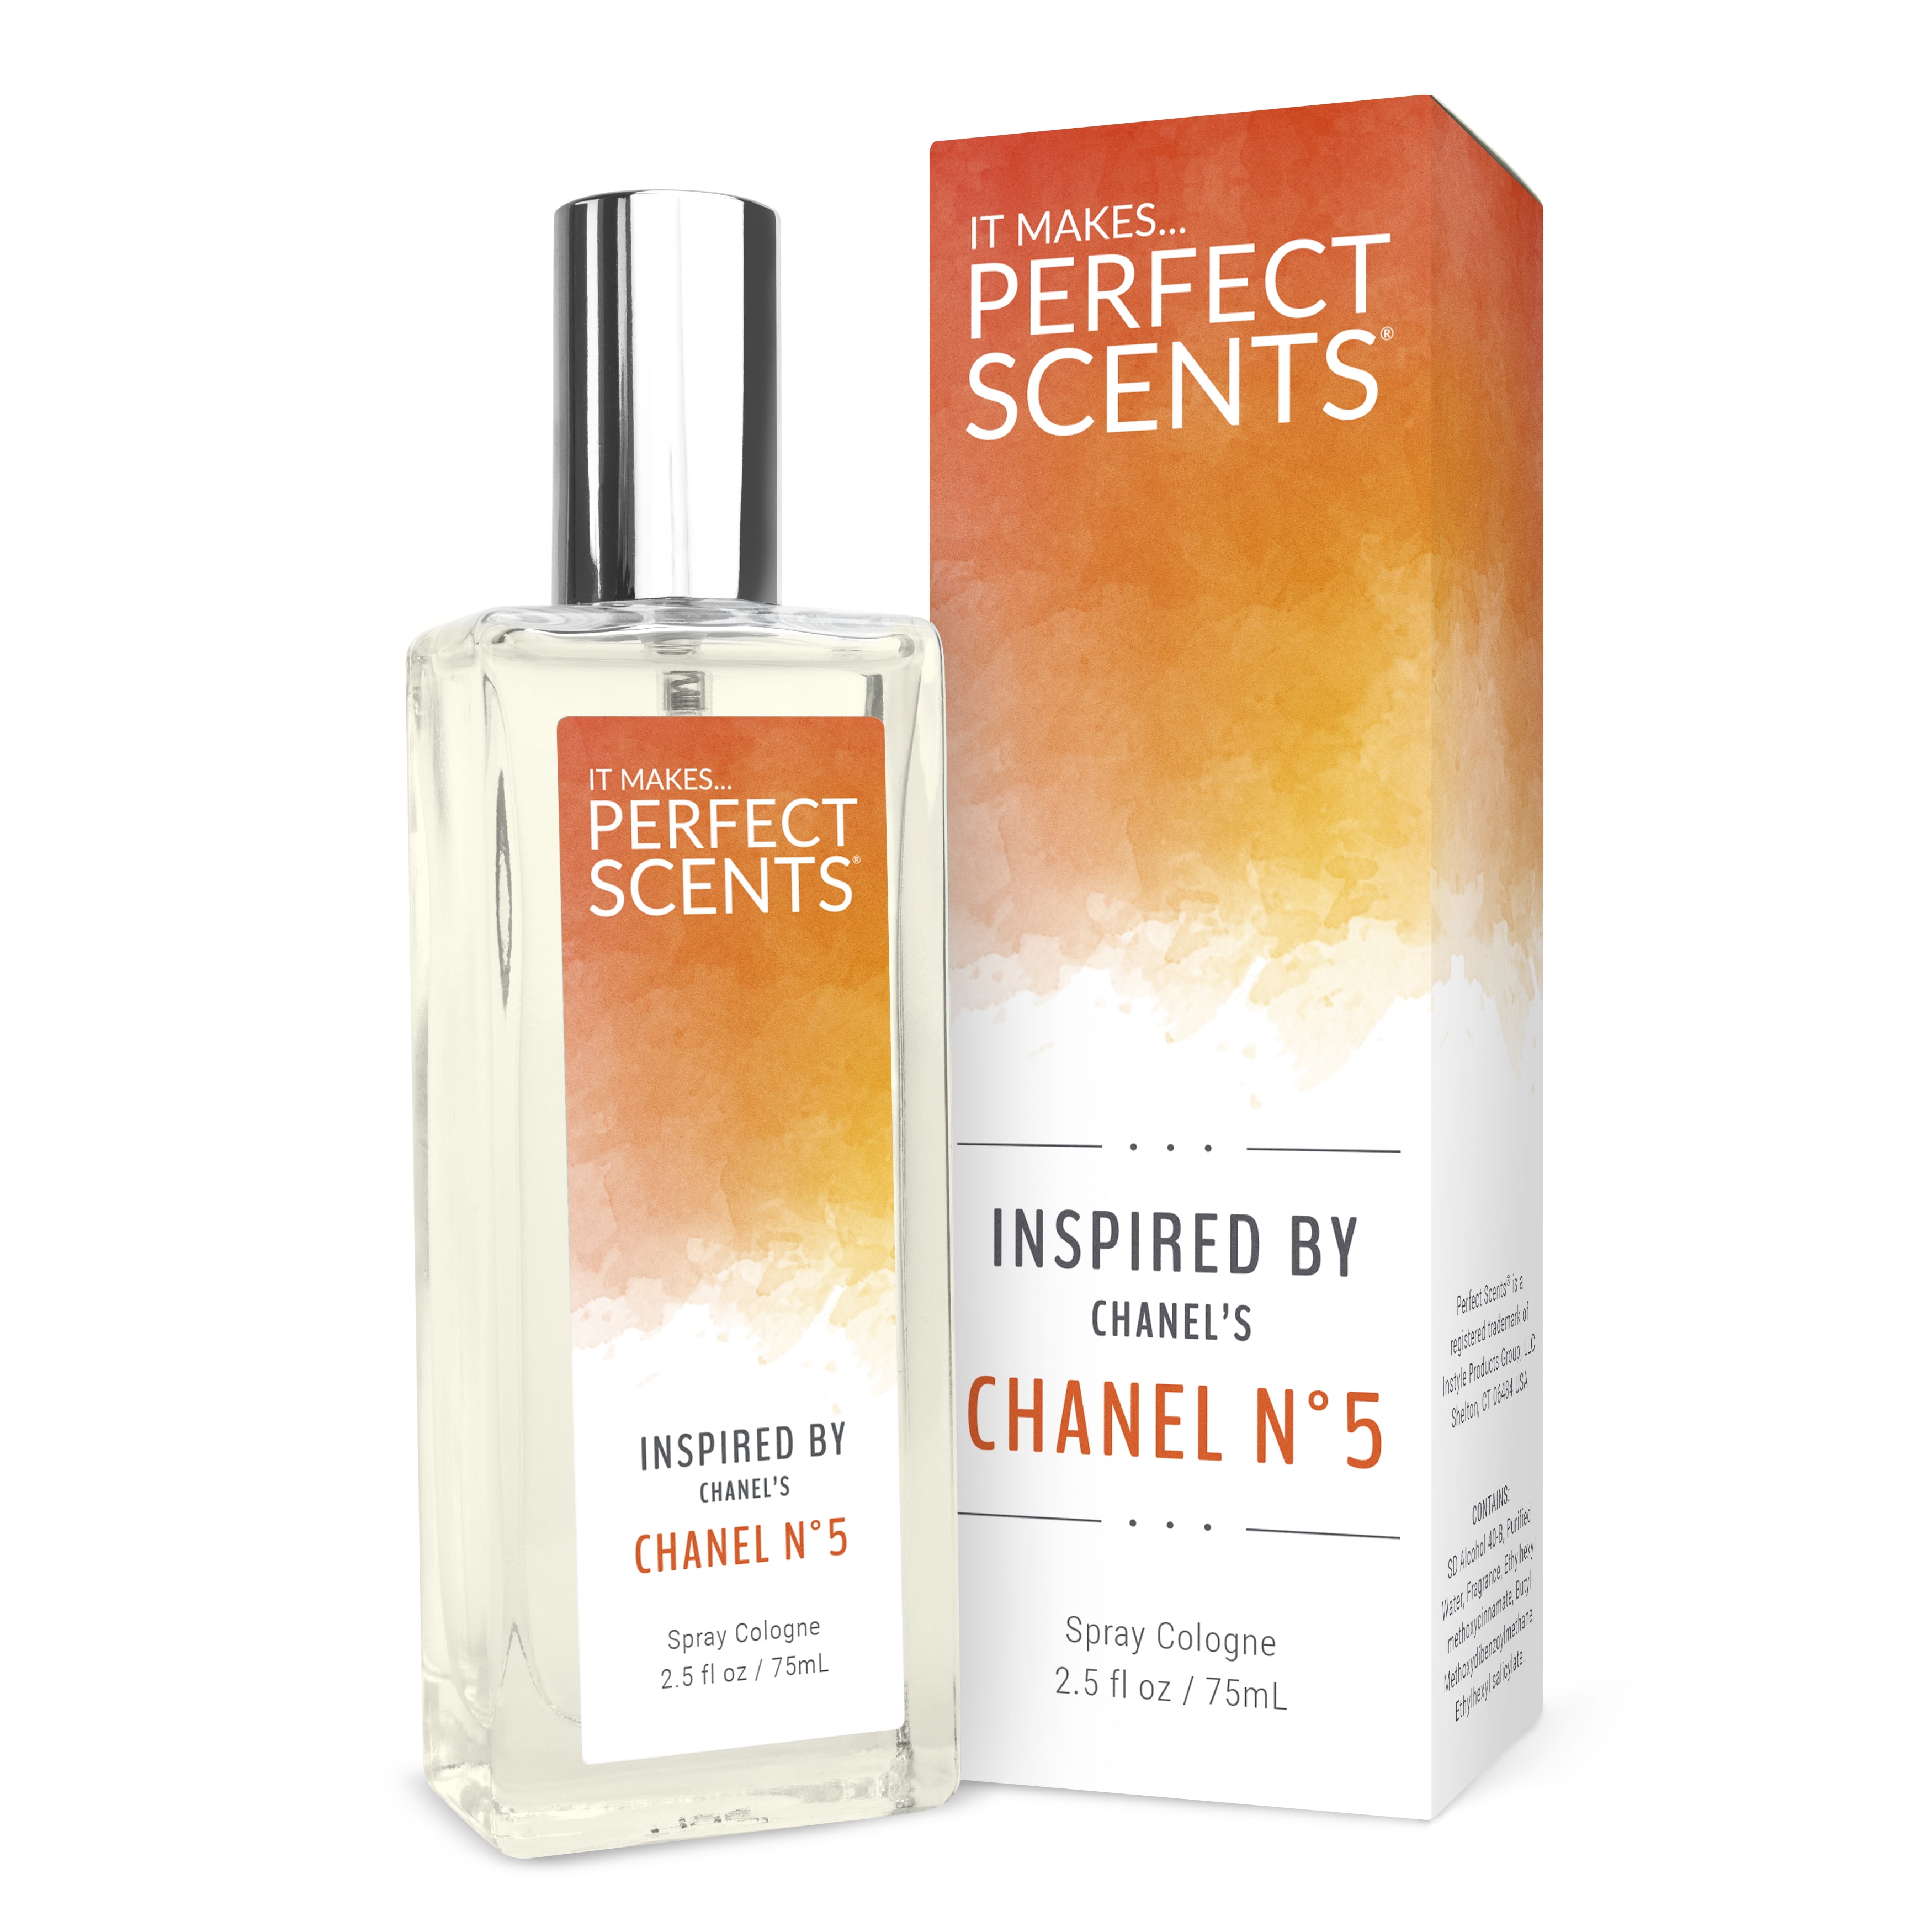 Dossier MUSKY OAKMOSS Eau de Parfum Natural Fragrance 1.7 Oz